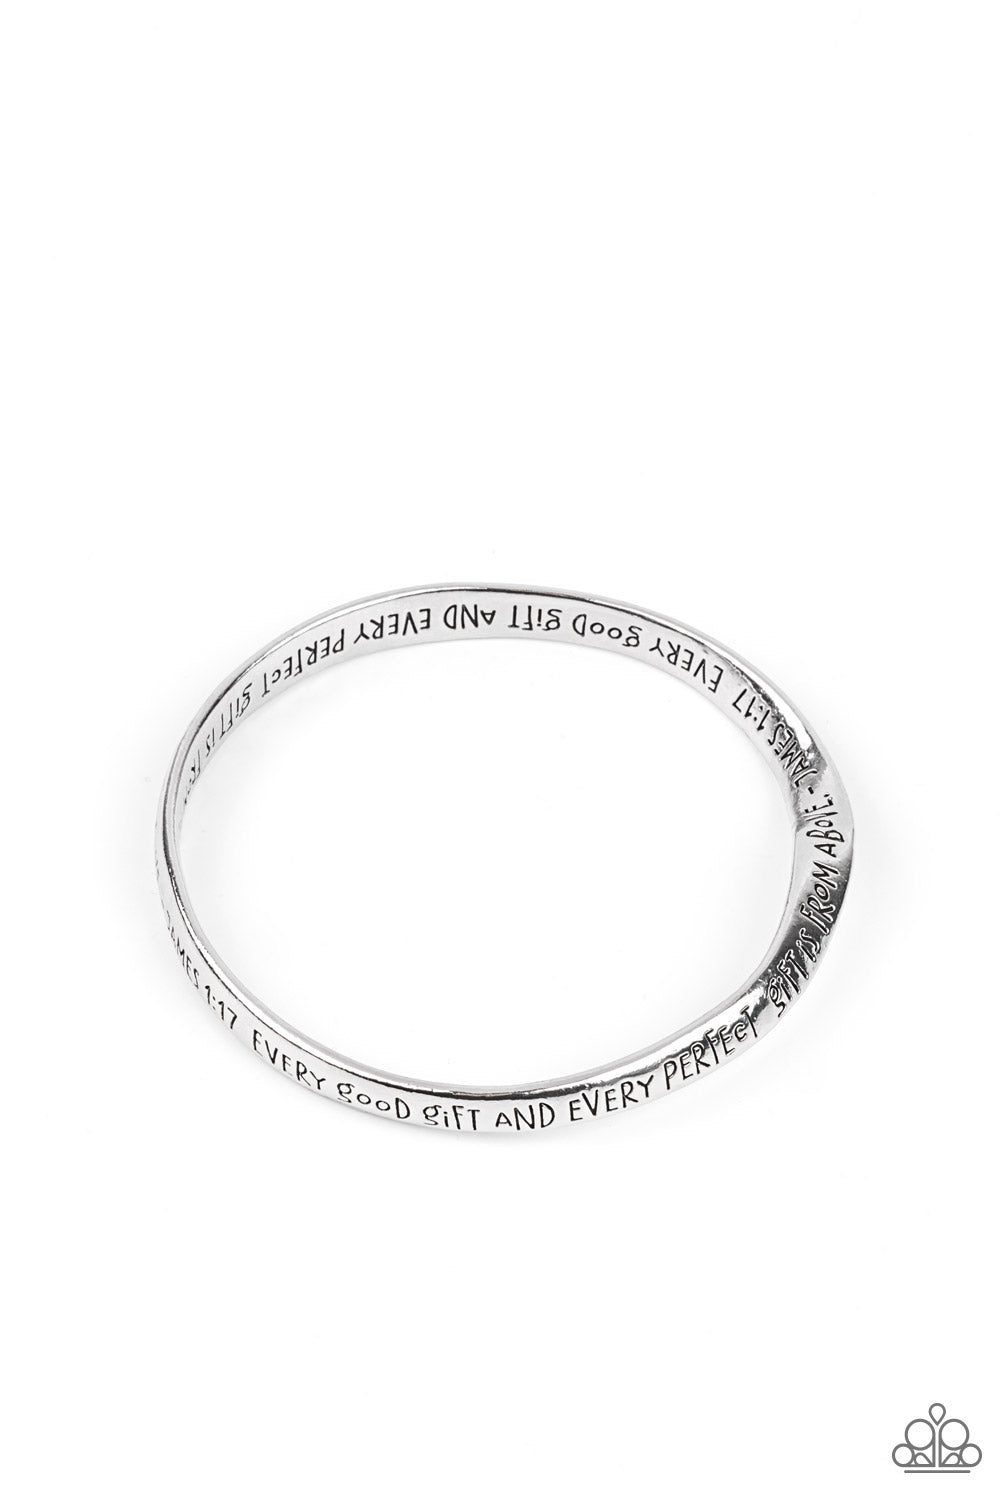 Perfect Present - Silver Bracelet freeshipping - JewLz4u Gemstone Gallery